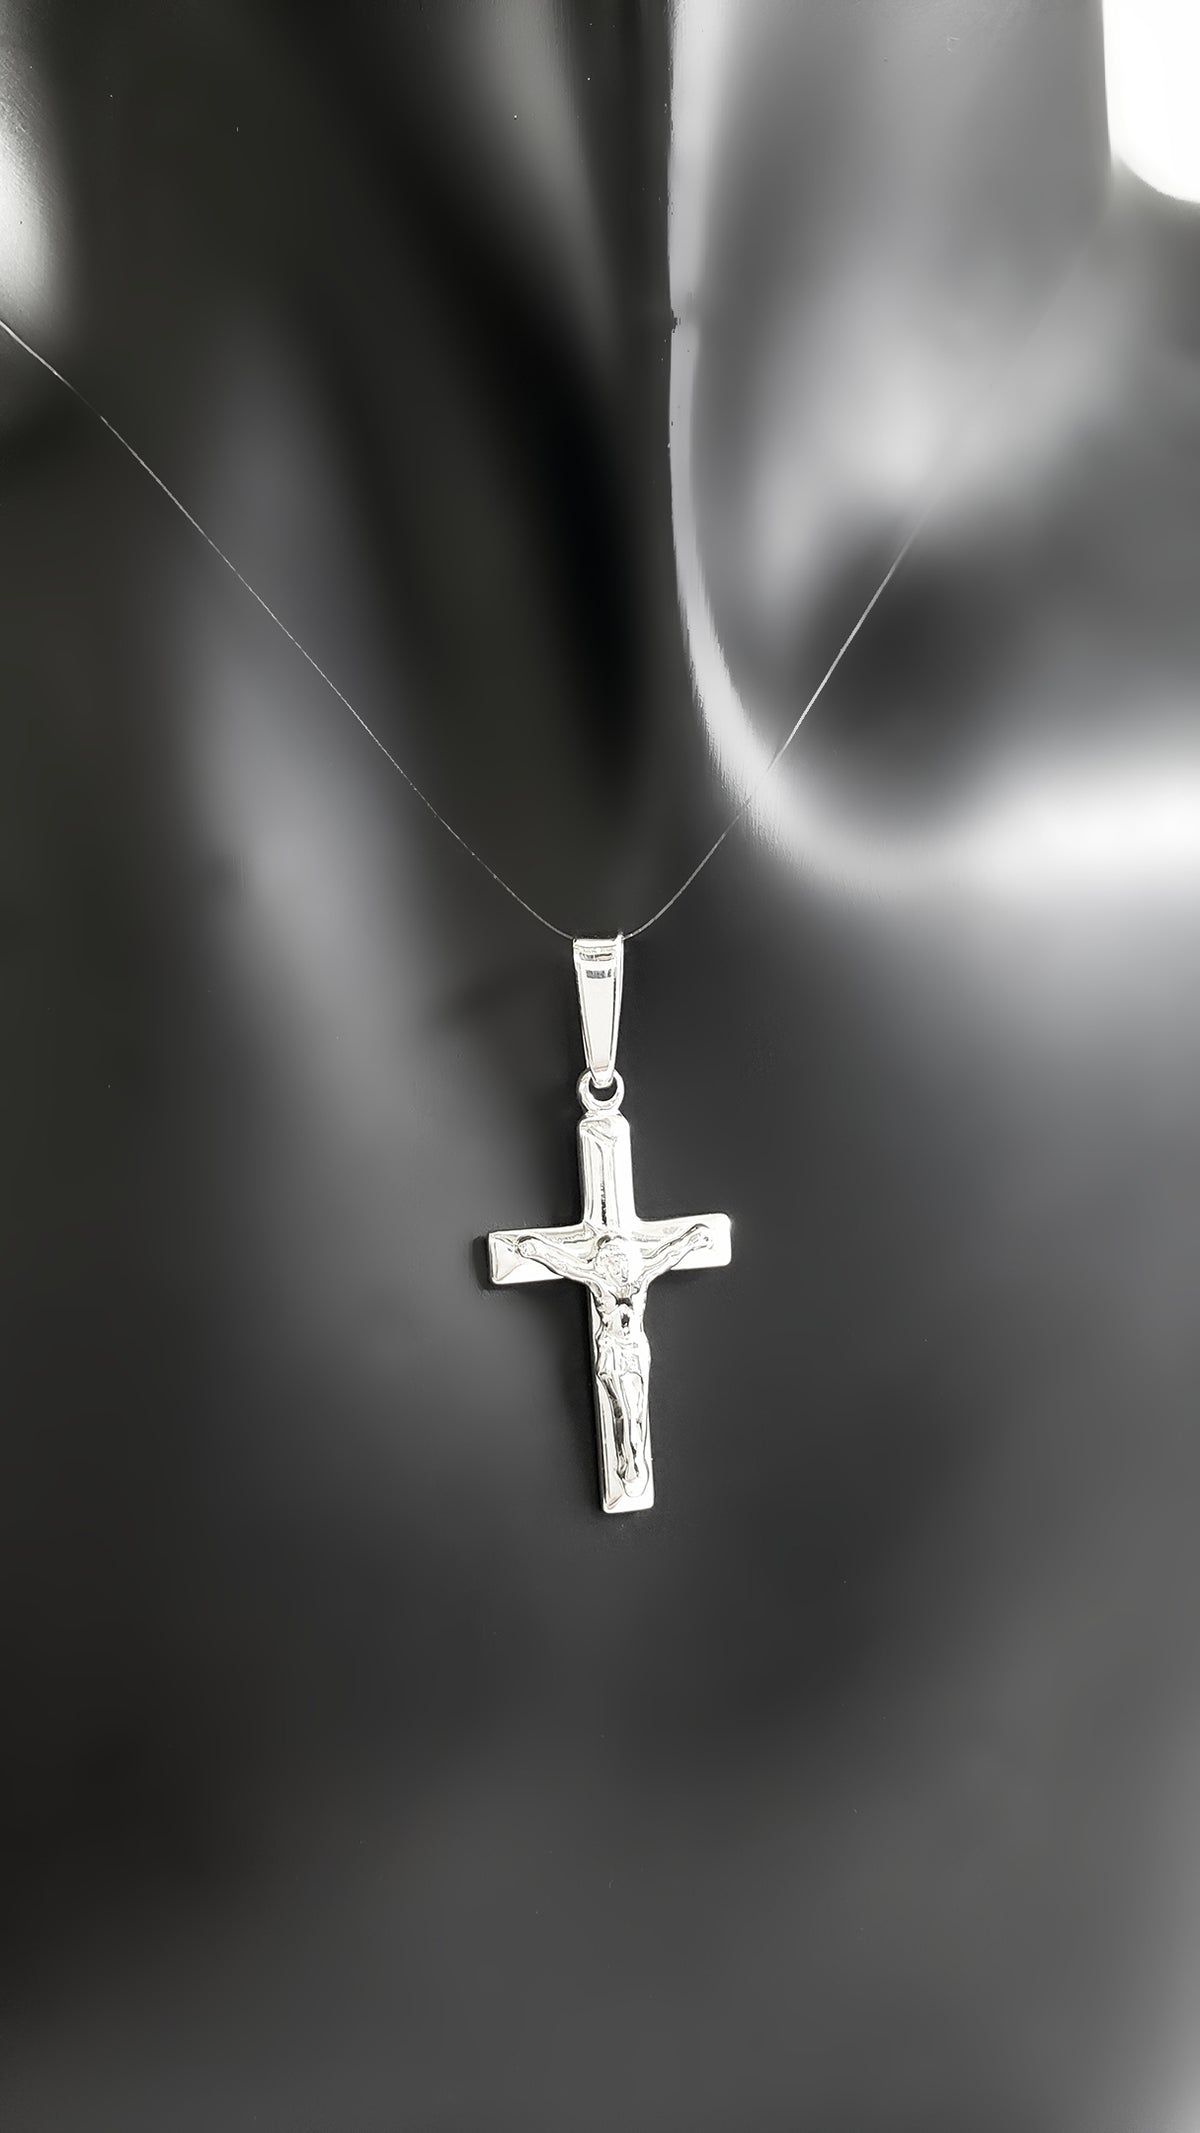 Abalorio de cruz de crucifijo hueco de plata de ley 925, 23 mm x 13 mm